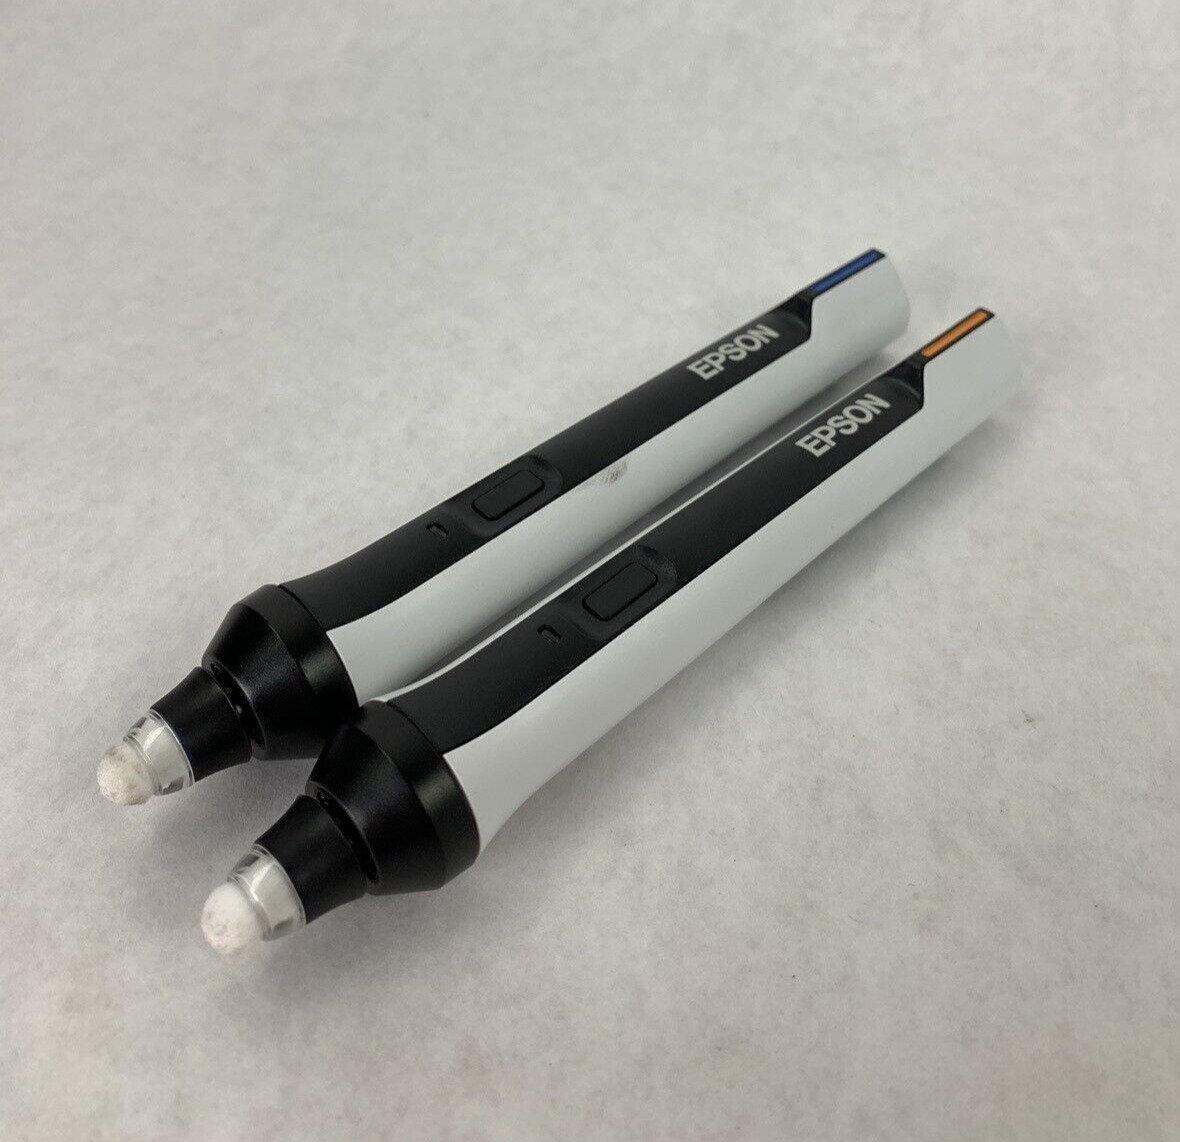 Pair of Epson ELPPN05 Handy Interactive Digital Pen Blue and Orange Power Test